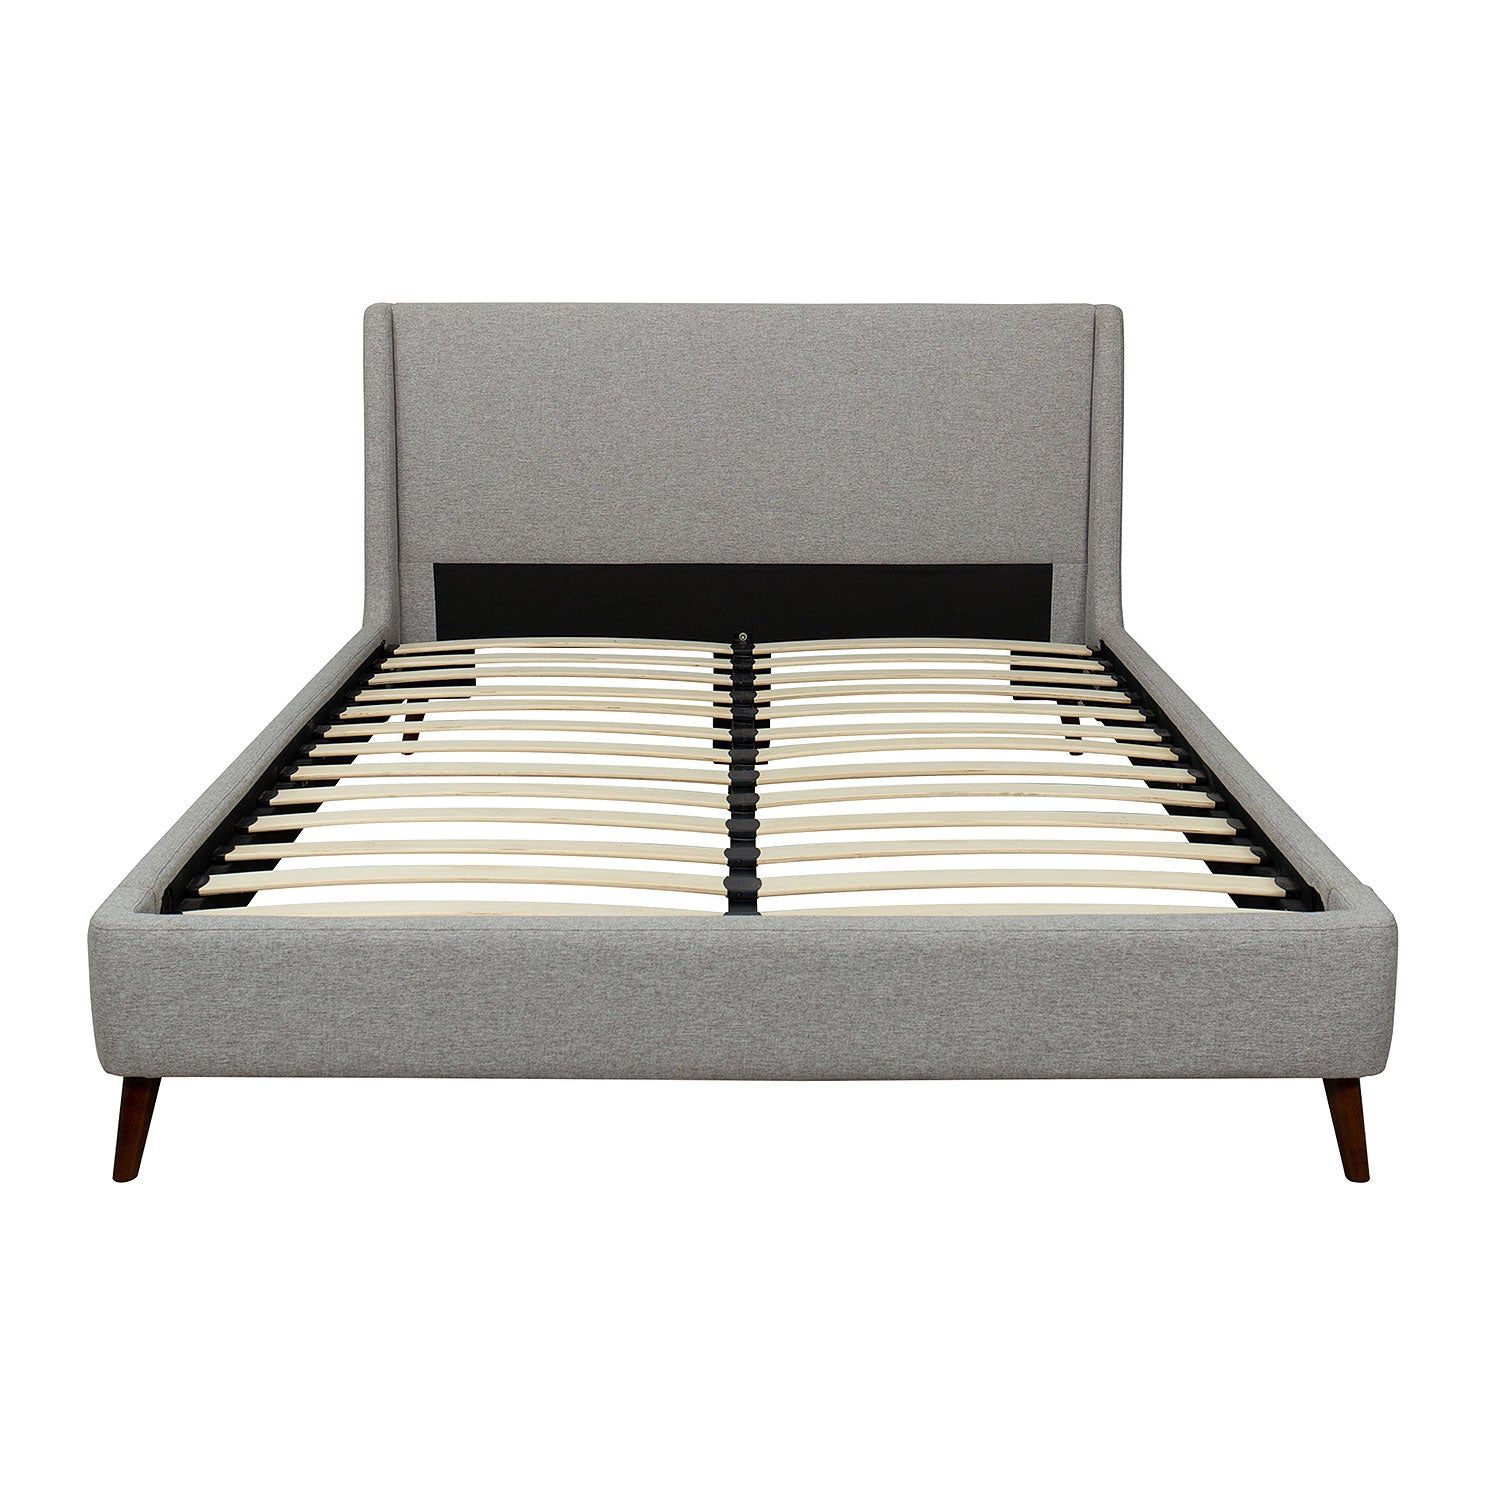 Brooklyn Upholstered Bed Frame - BlissfulNights.com